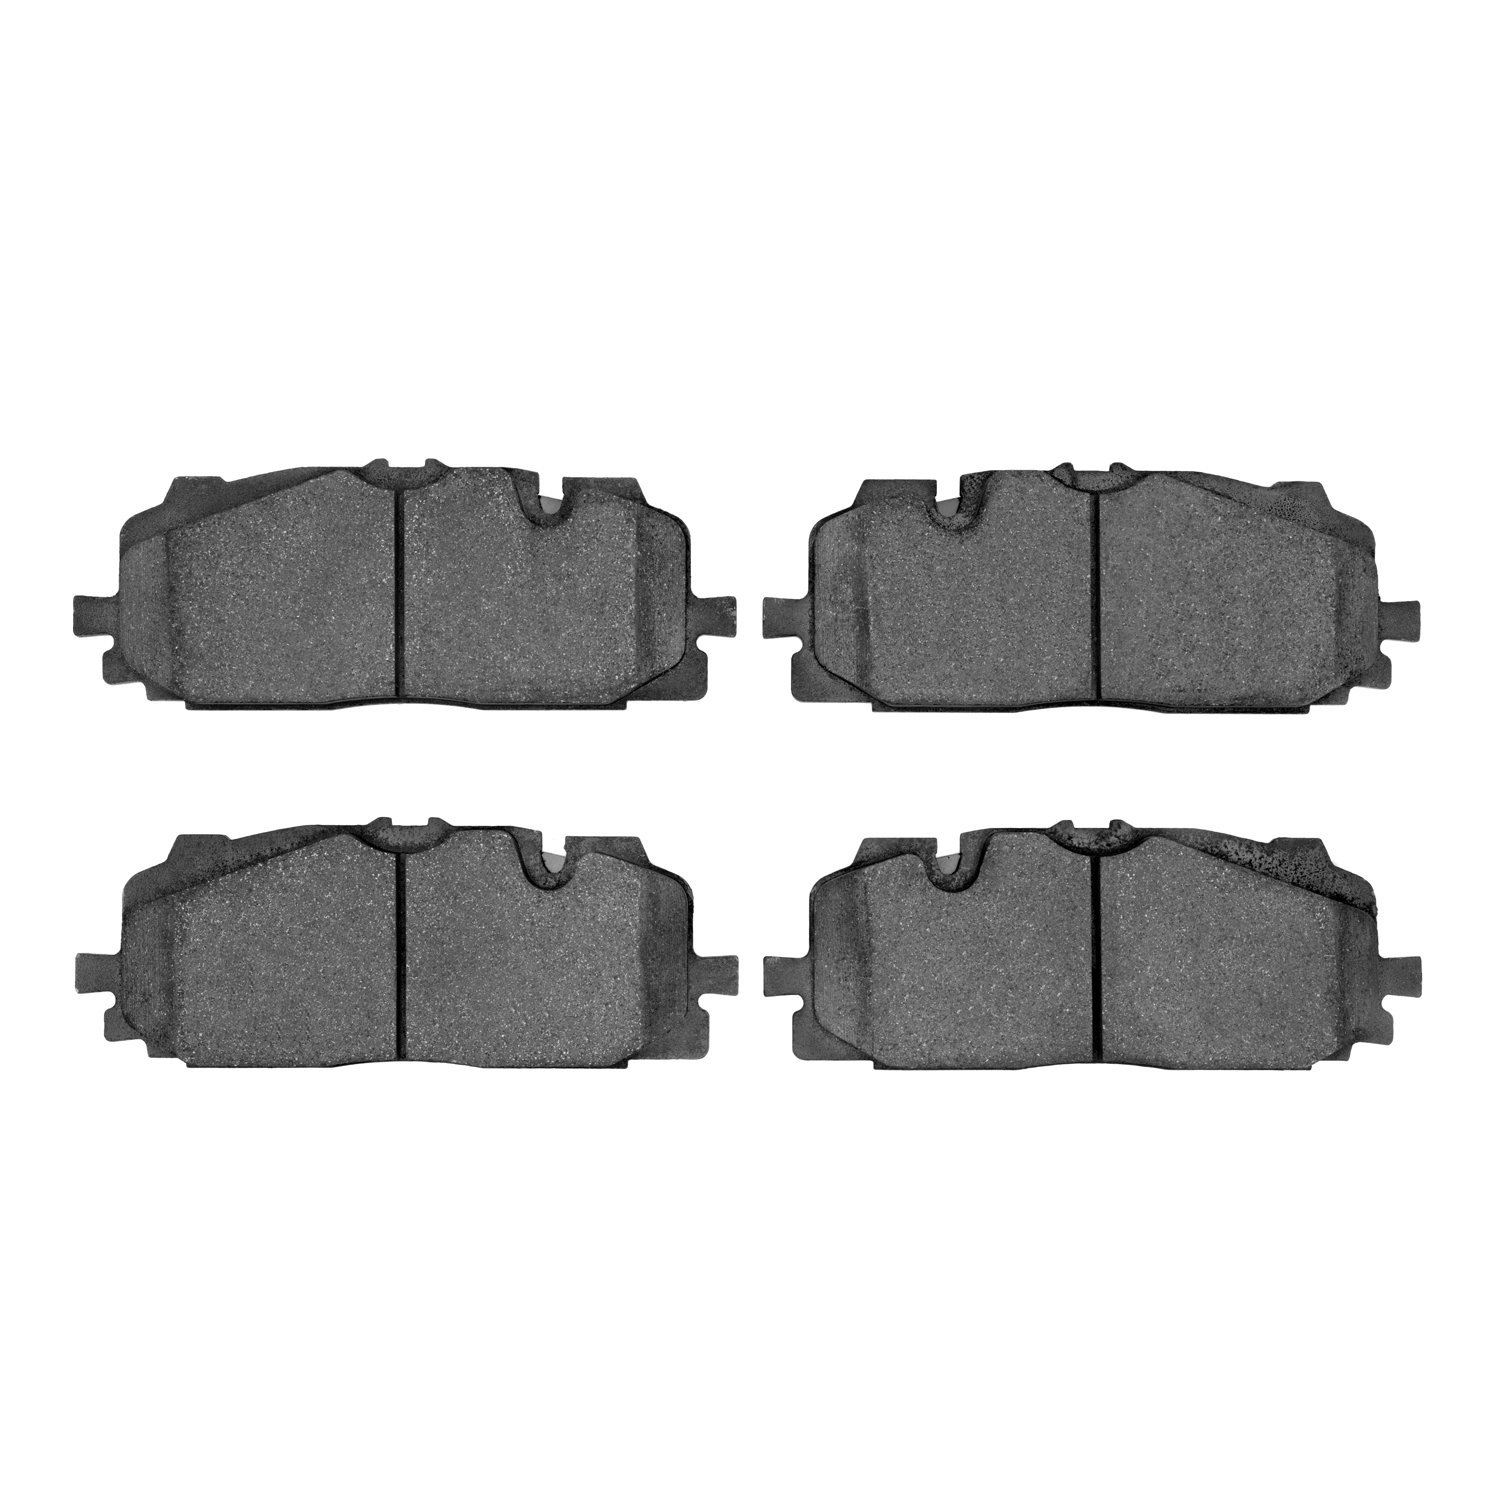 1600-1894-00 5000 Euro Ceramic Brake Pads, Fits Select Audi/Volkswagen, Position: Front